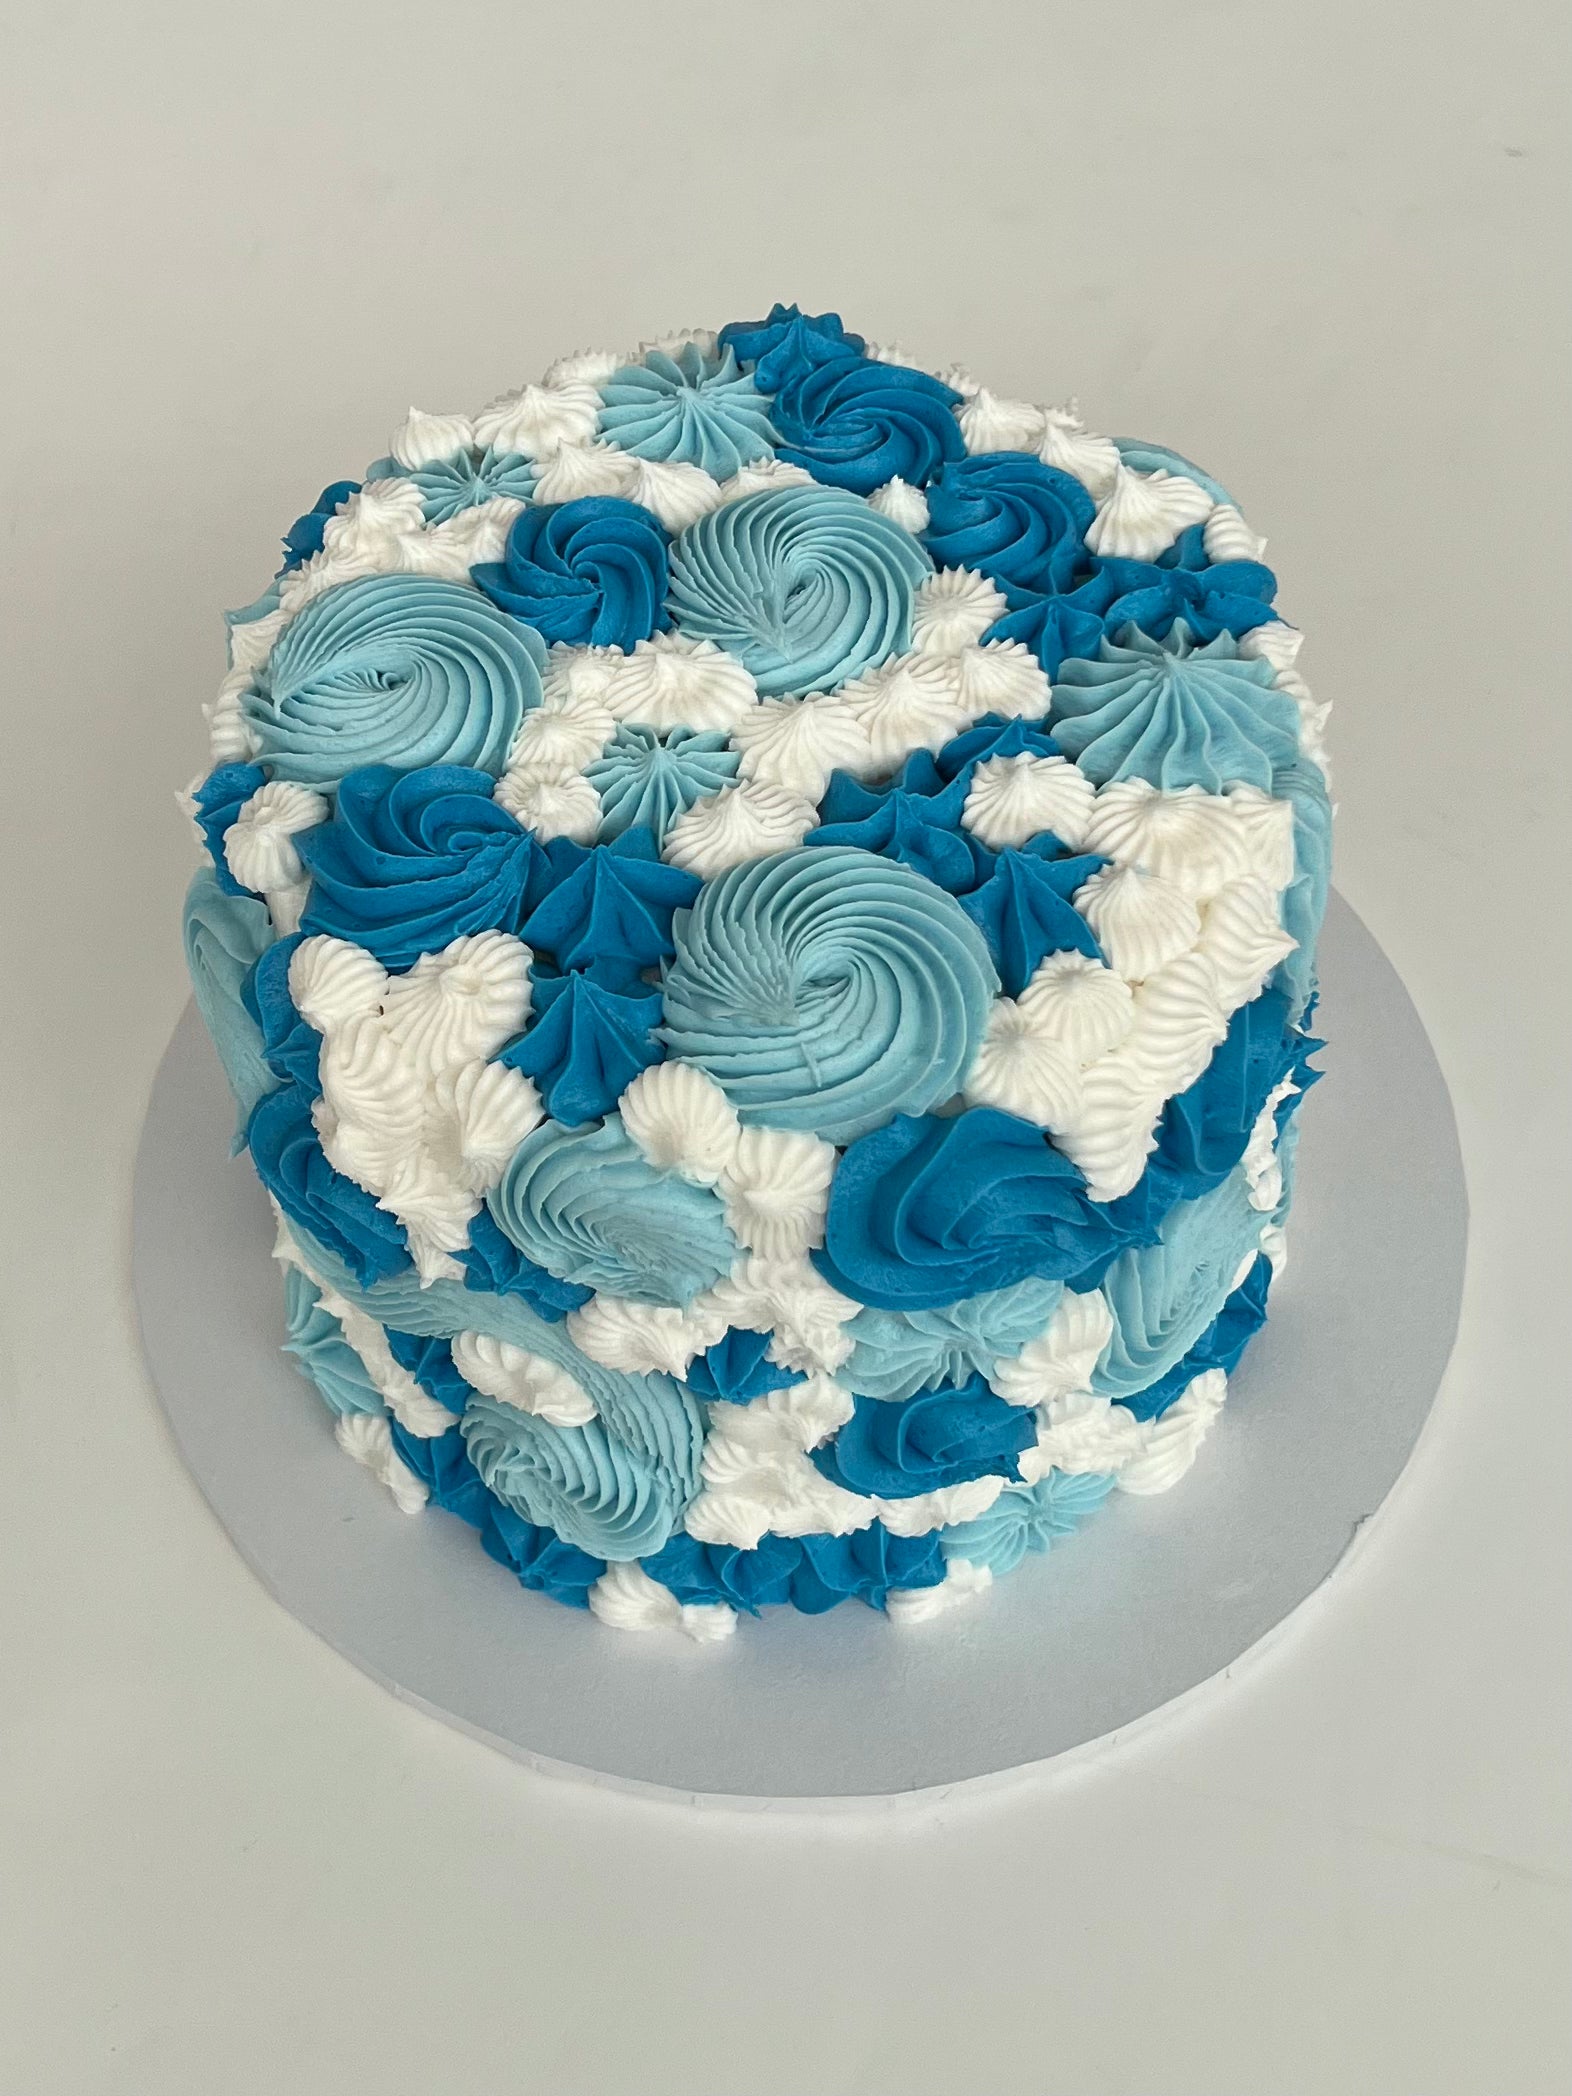 Groovy Cake - Blue